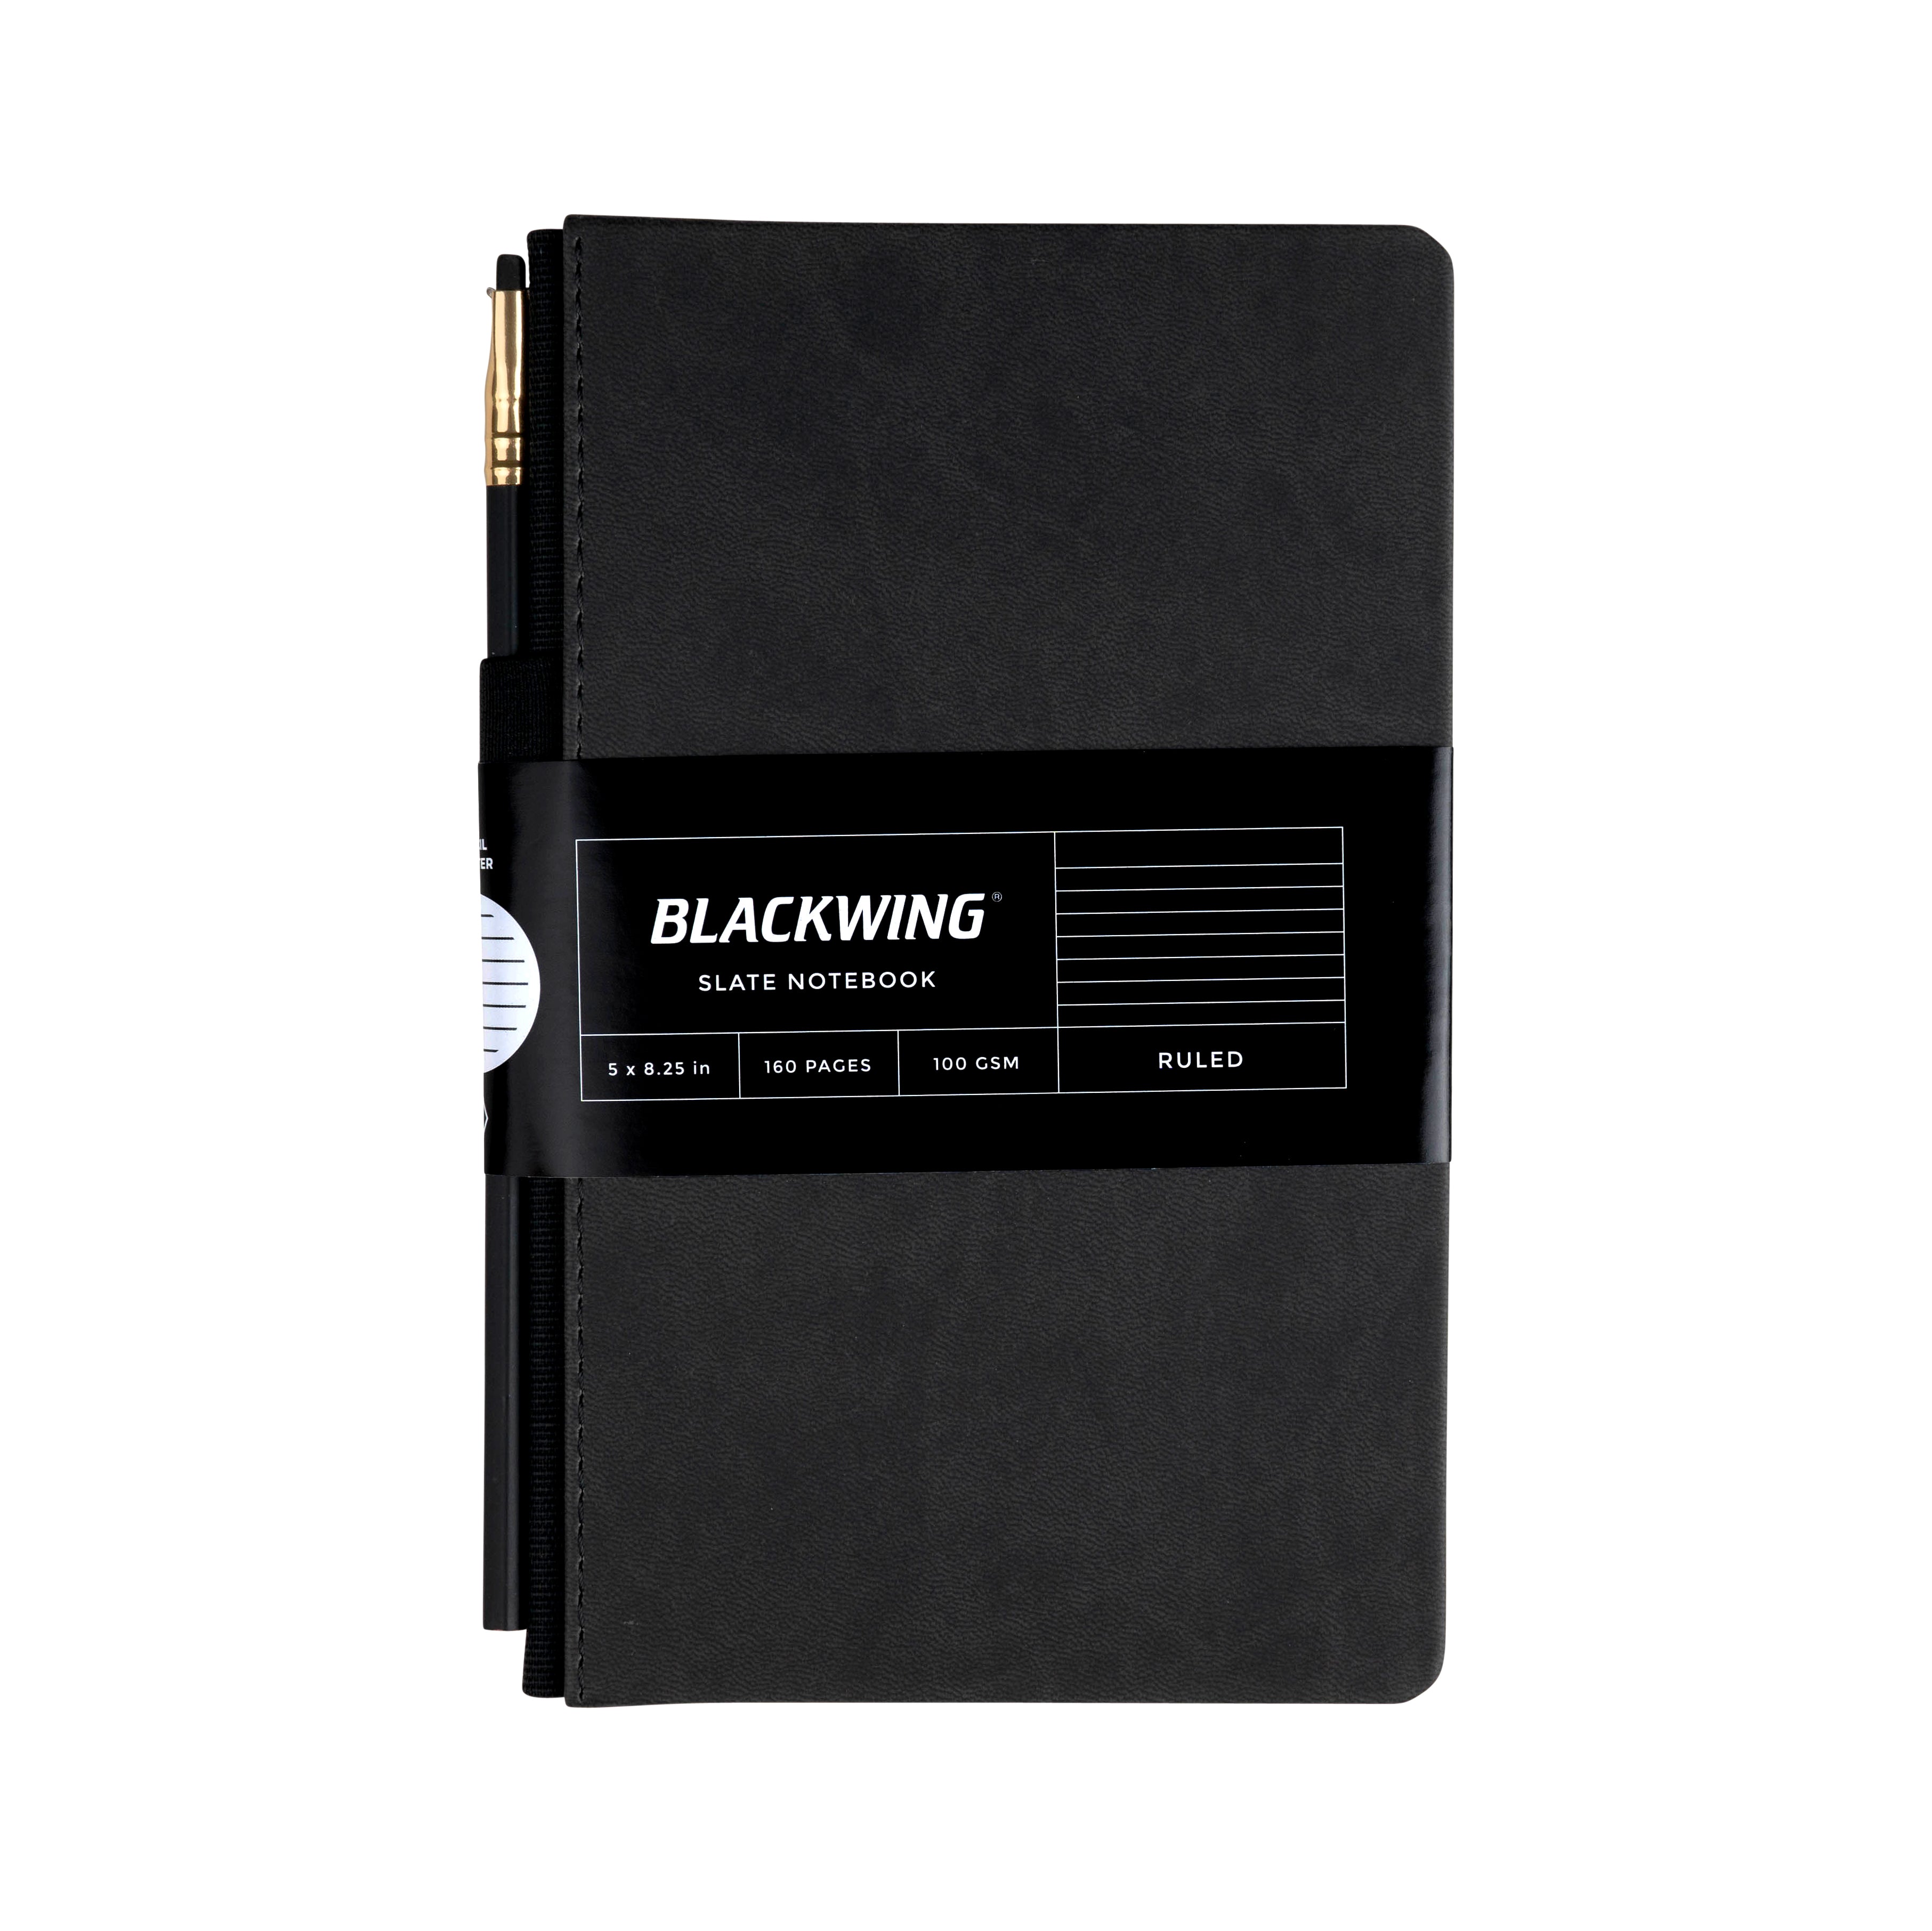 Blackwing Slate Notebook - Ruled Paper